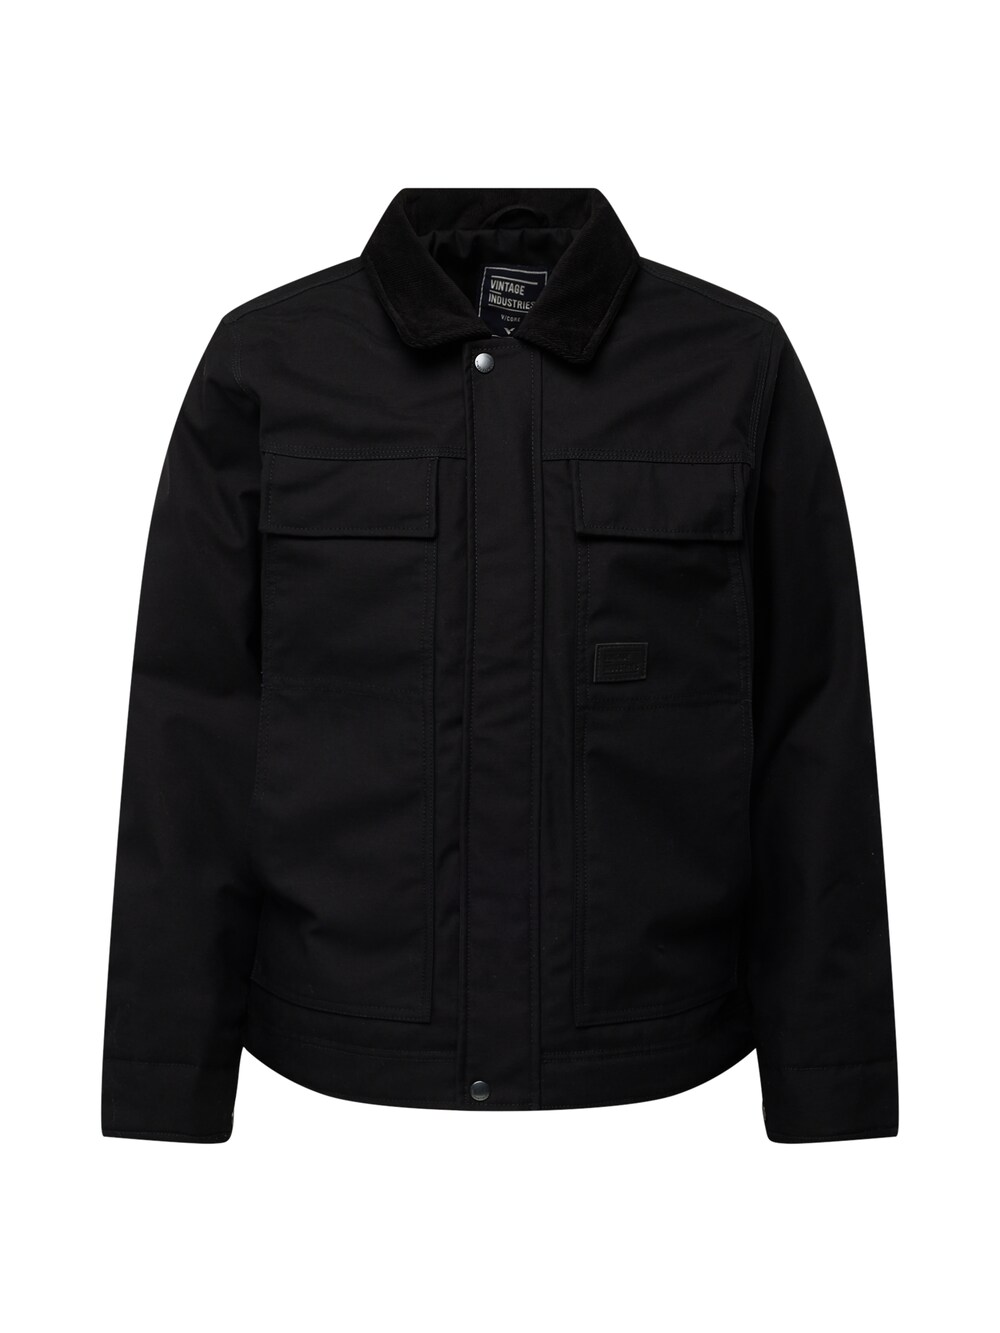 Межсезонная куртка Vintage Industries, черный